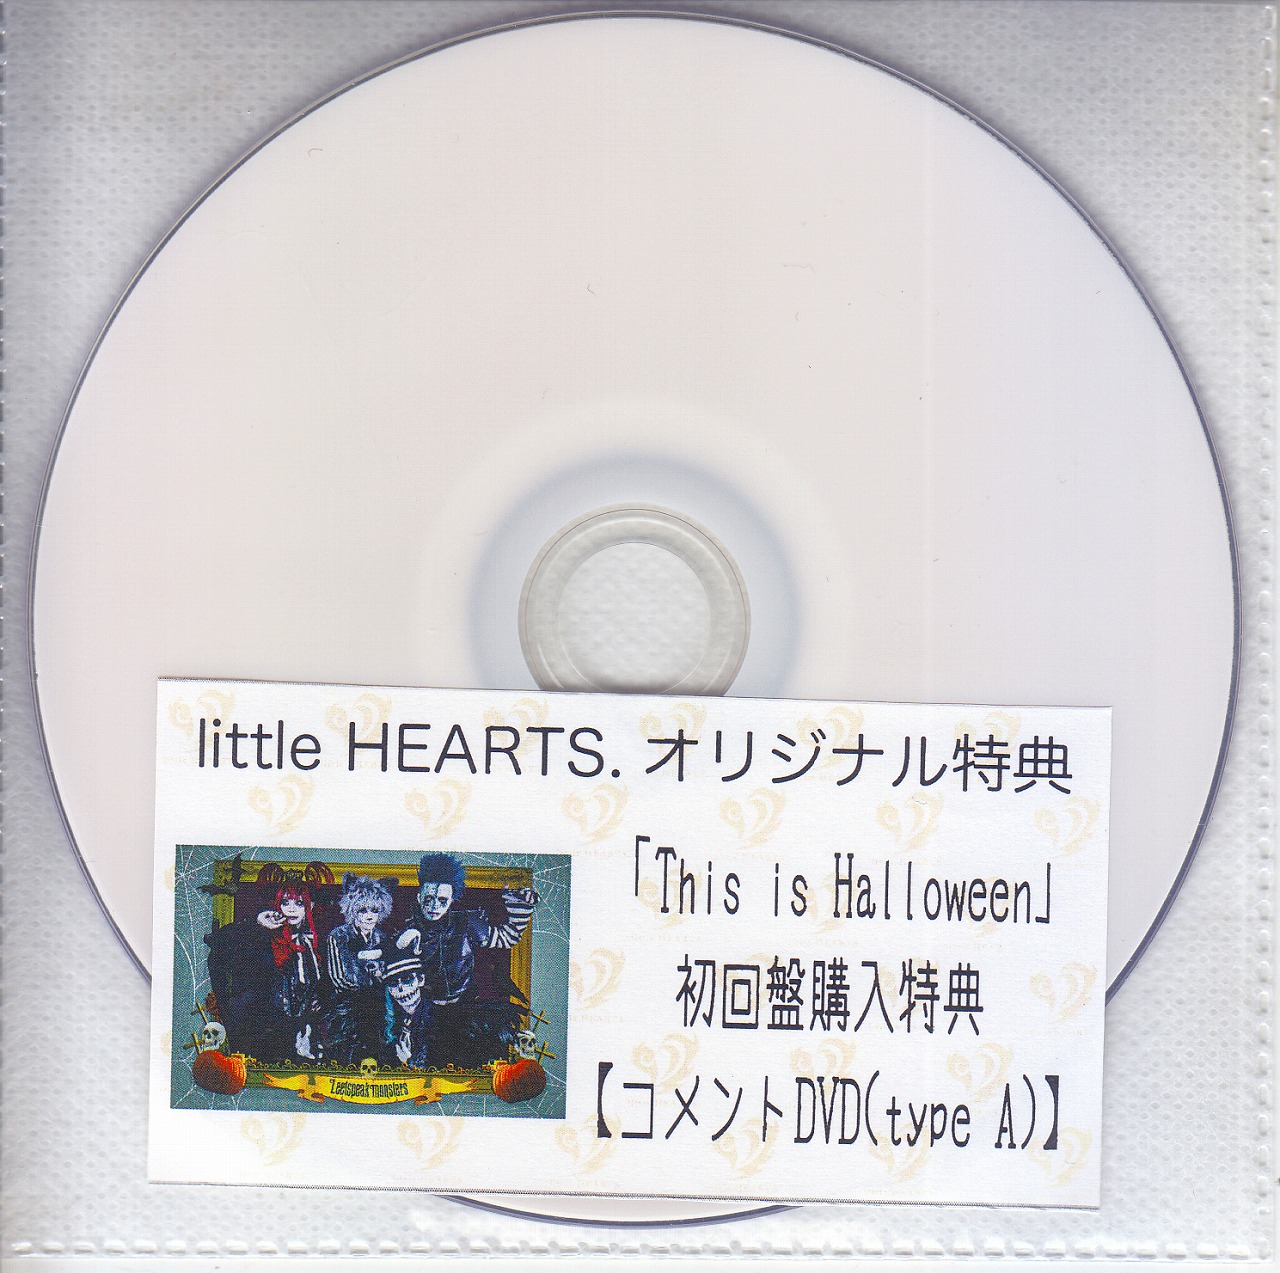 Leetspeak monsters ( リートスピークモンスターズ )  の DVD 【little HEARTS.】This is \halloween 初回盤購入特典【コメントDVD(type A)】